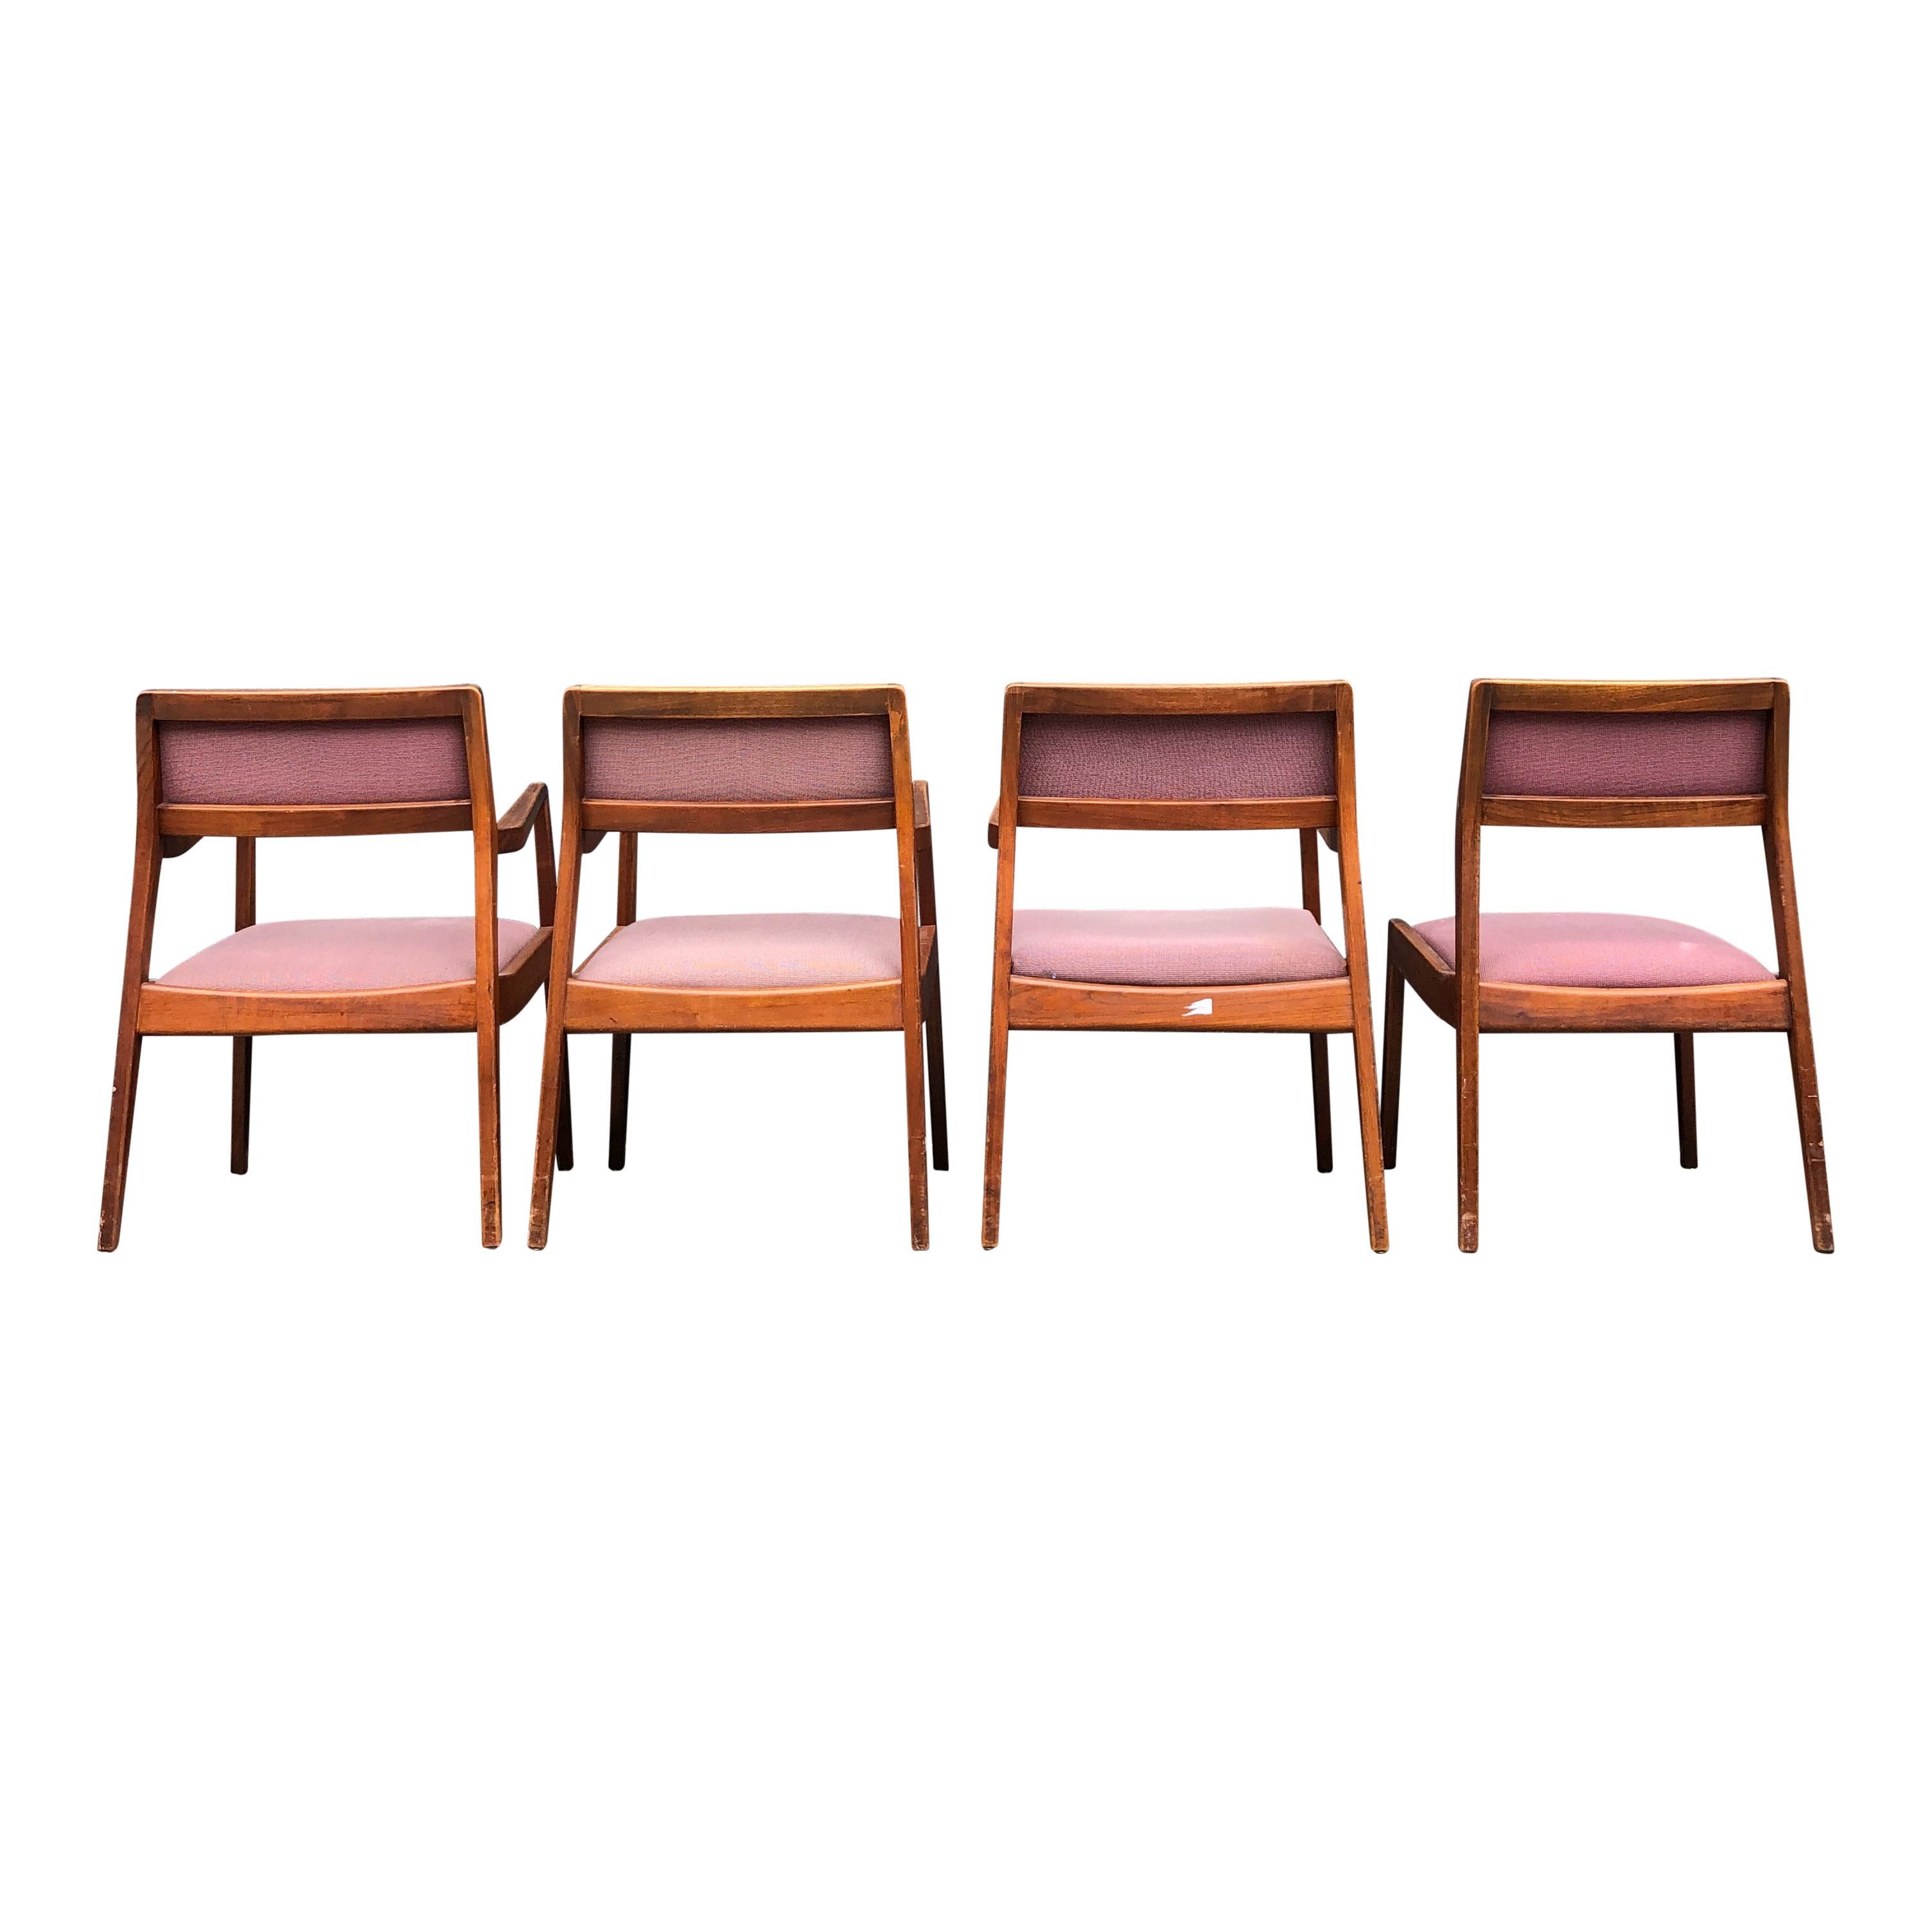 Mid-Century Modern Jens Risom for Jens Risom Designs Midcentury Playboy Chairs